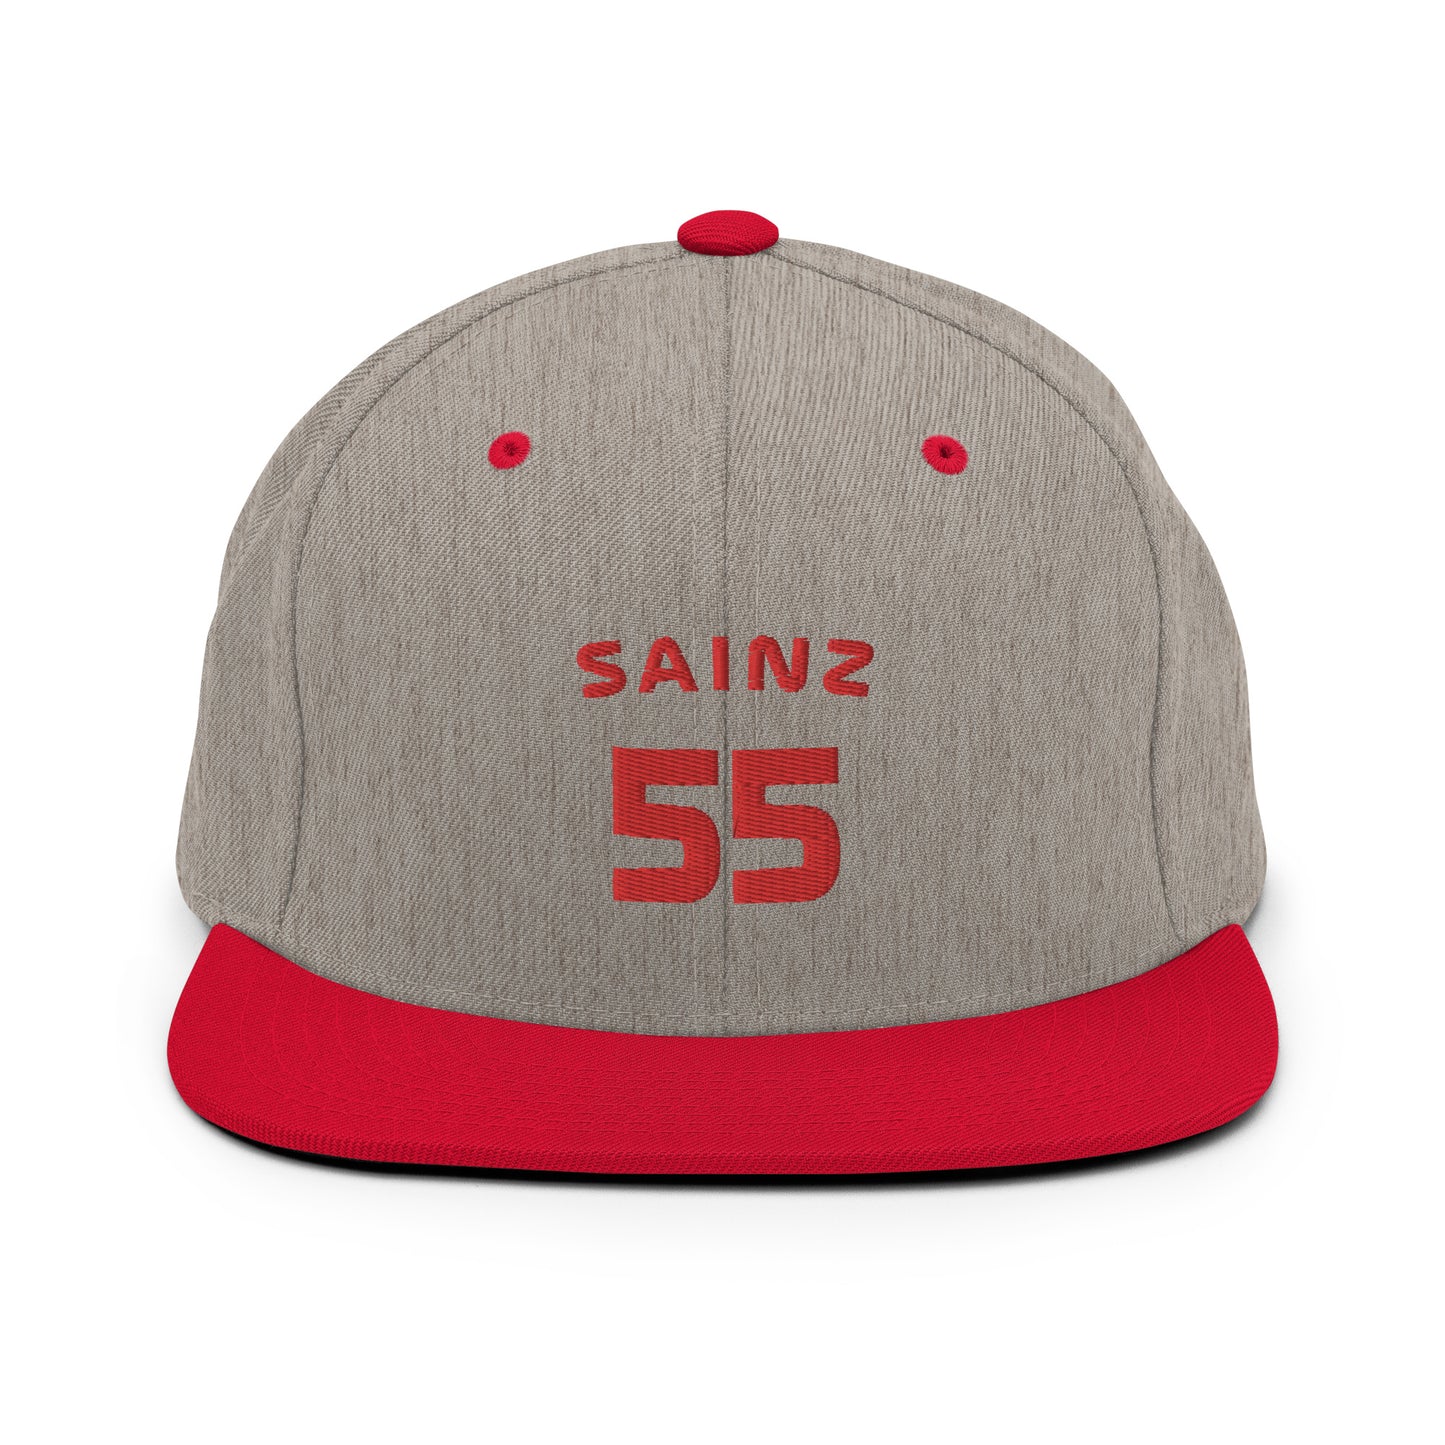 carlos sainz 55 snapback hat red and grey